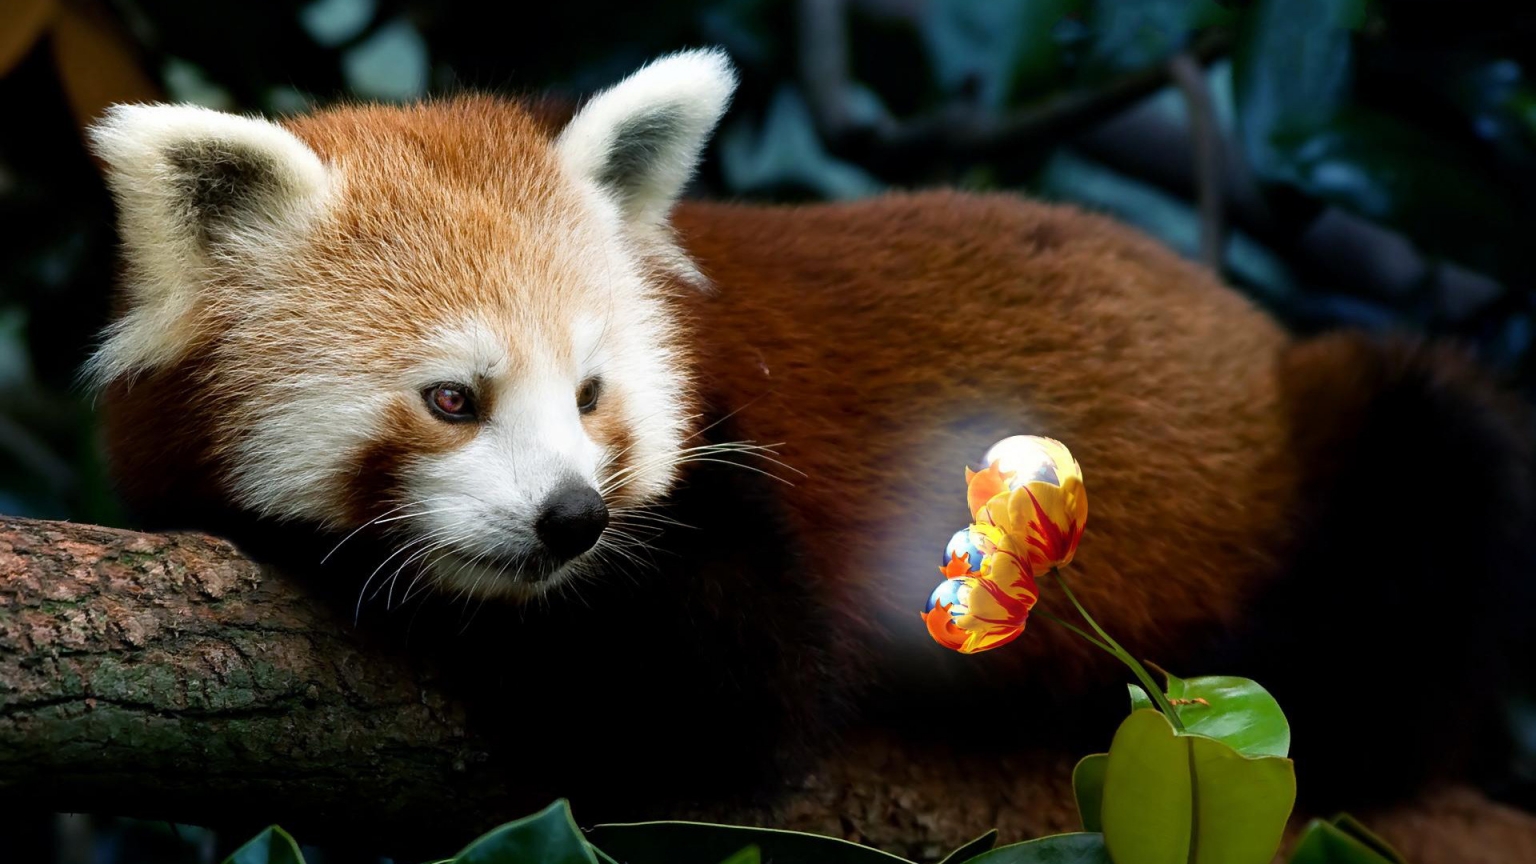 Red Panda Firefox for 1536 x 864 HDTV resolution